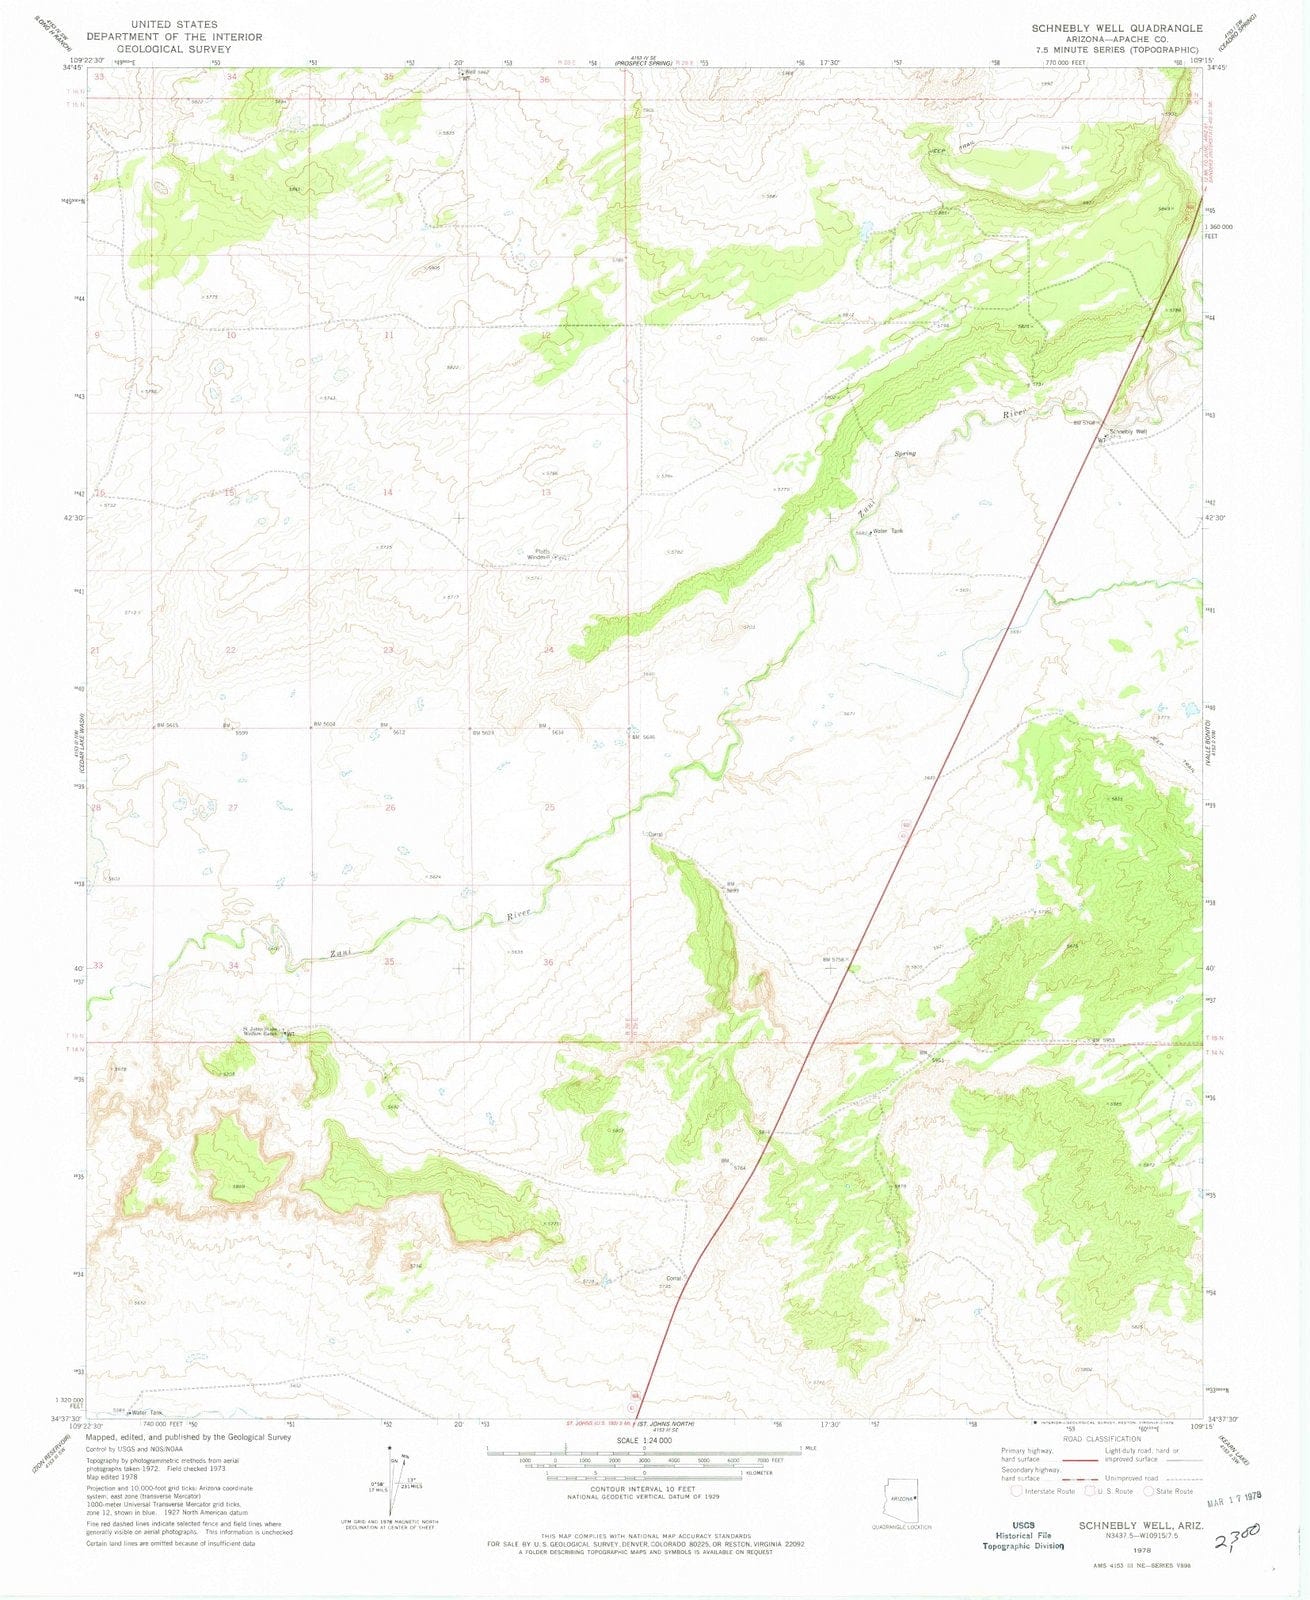 1978 Schnebly Well, AZ - Arizona - USGS Topographic Map